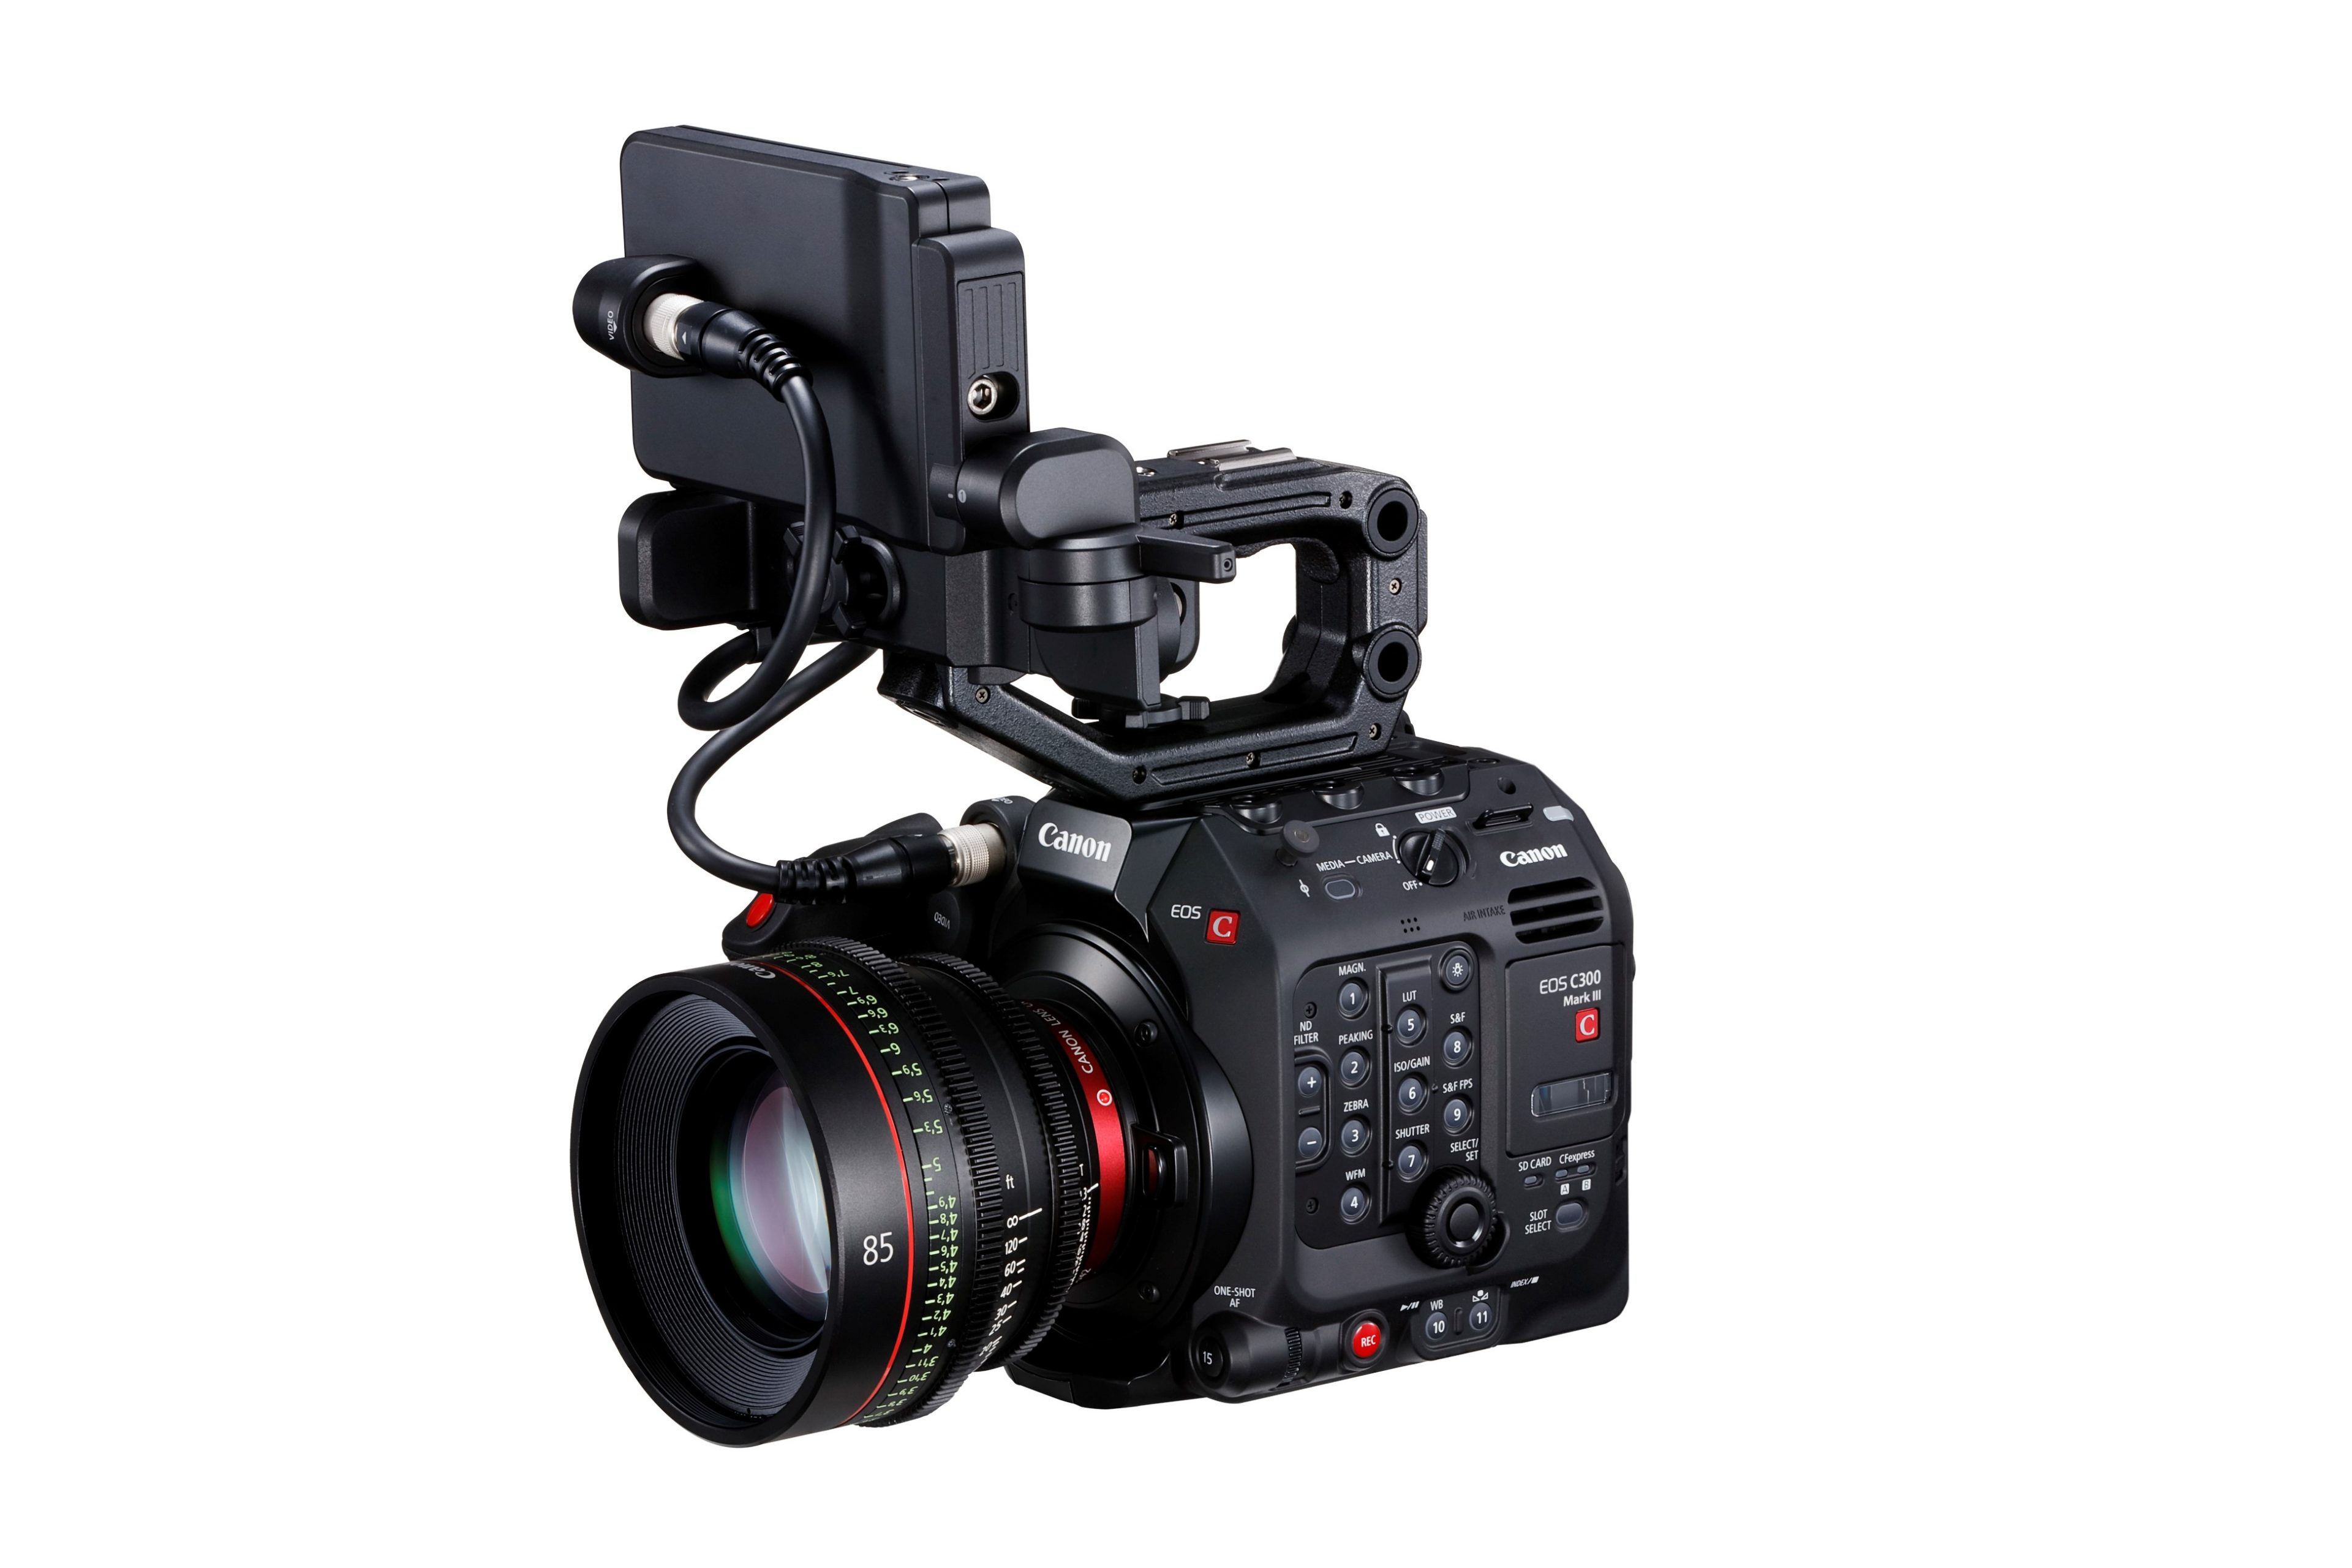 Canon ra mắt máy quay EOS C300 Mark III Cinema, cảm biến Dual Gain Output, hỗ trợ quay phim 4K/120p, giá 285 triệu